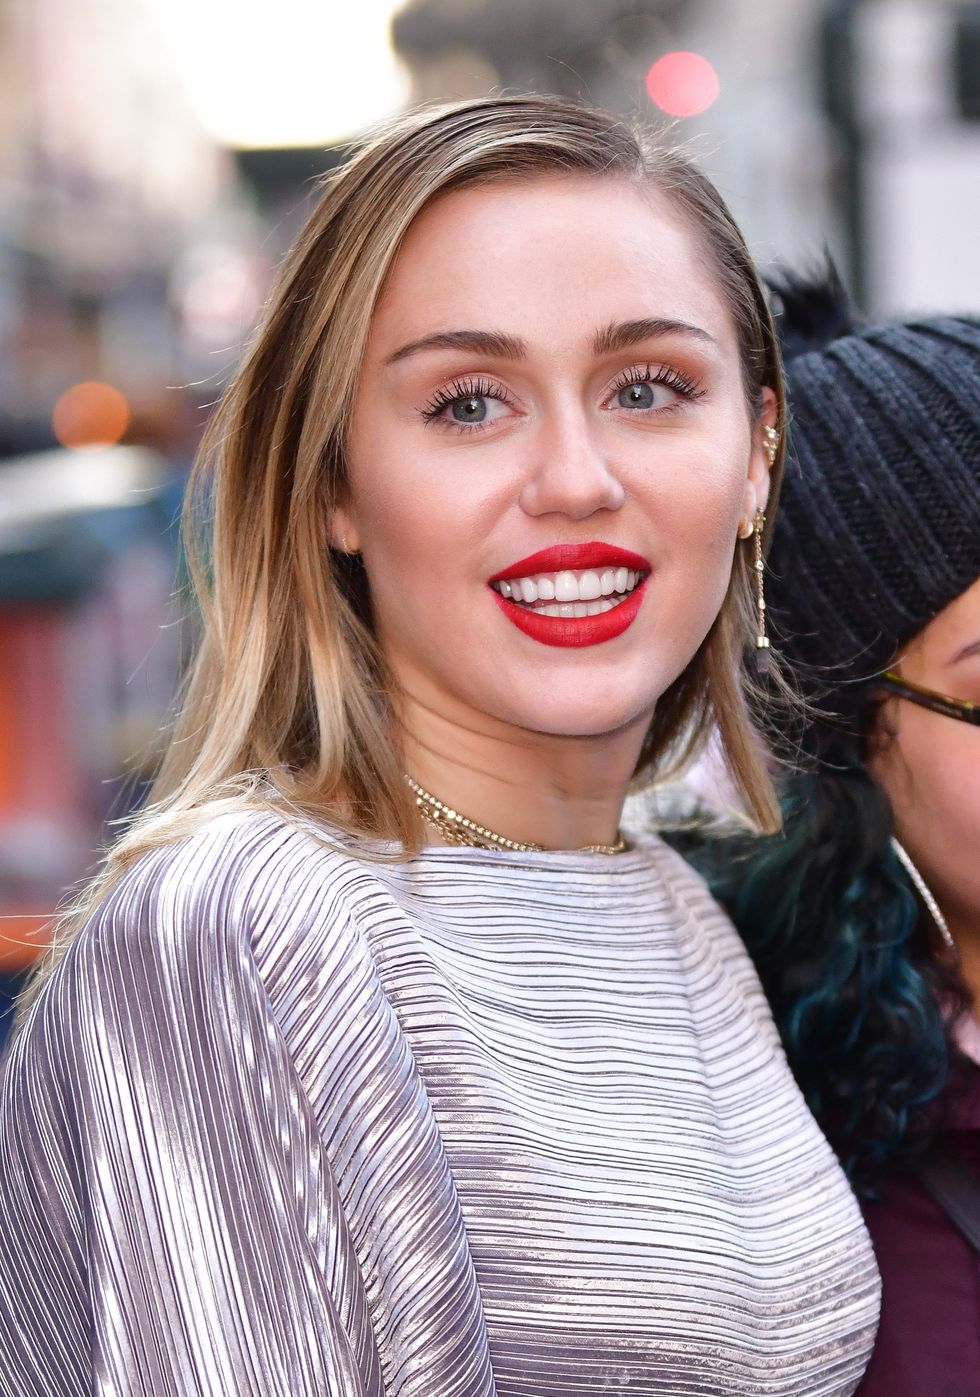 Miley Cyrus confirms she stars in Black Mirror season 5